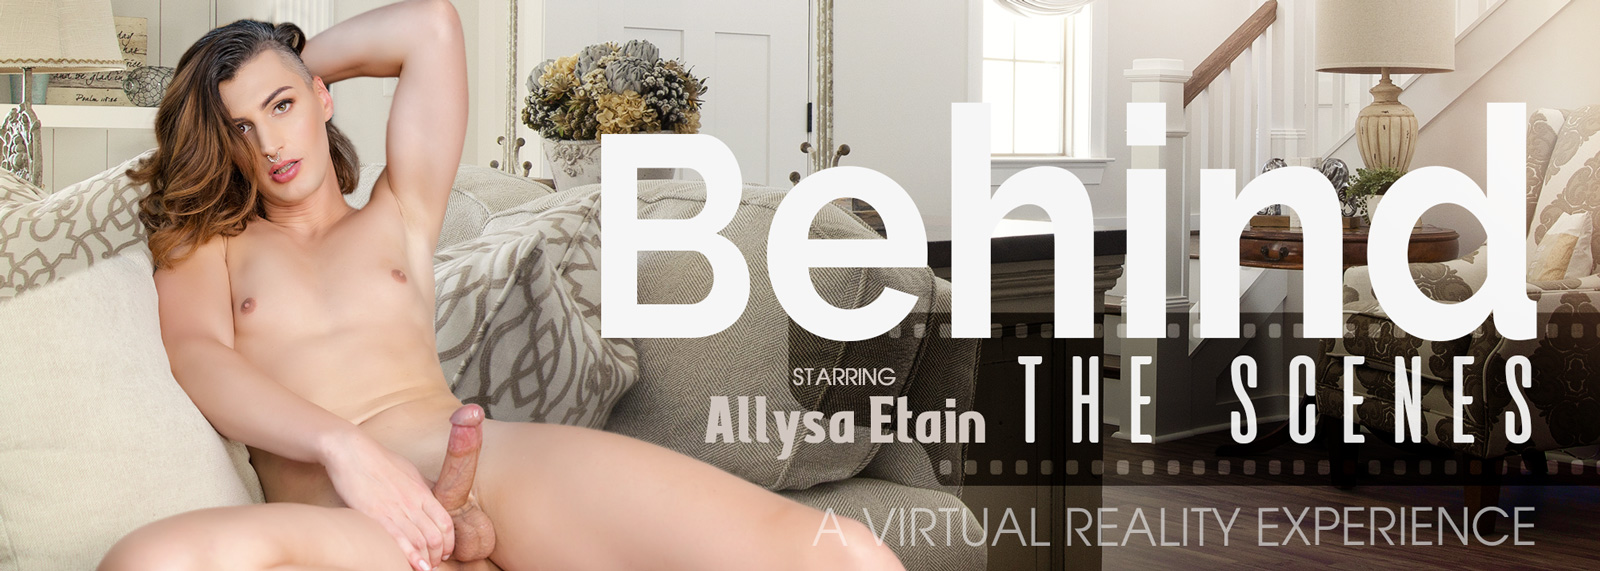 Behind the Scenes - VR Porn Video, Starring Allysa Etain VR